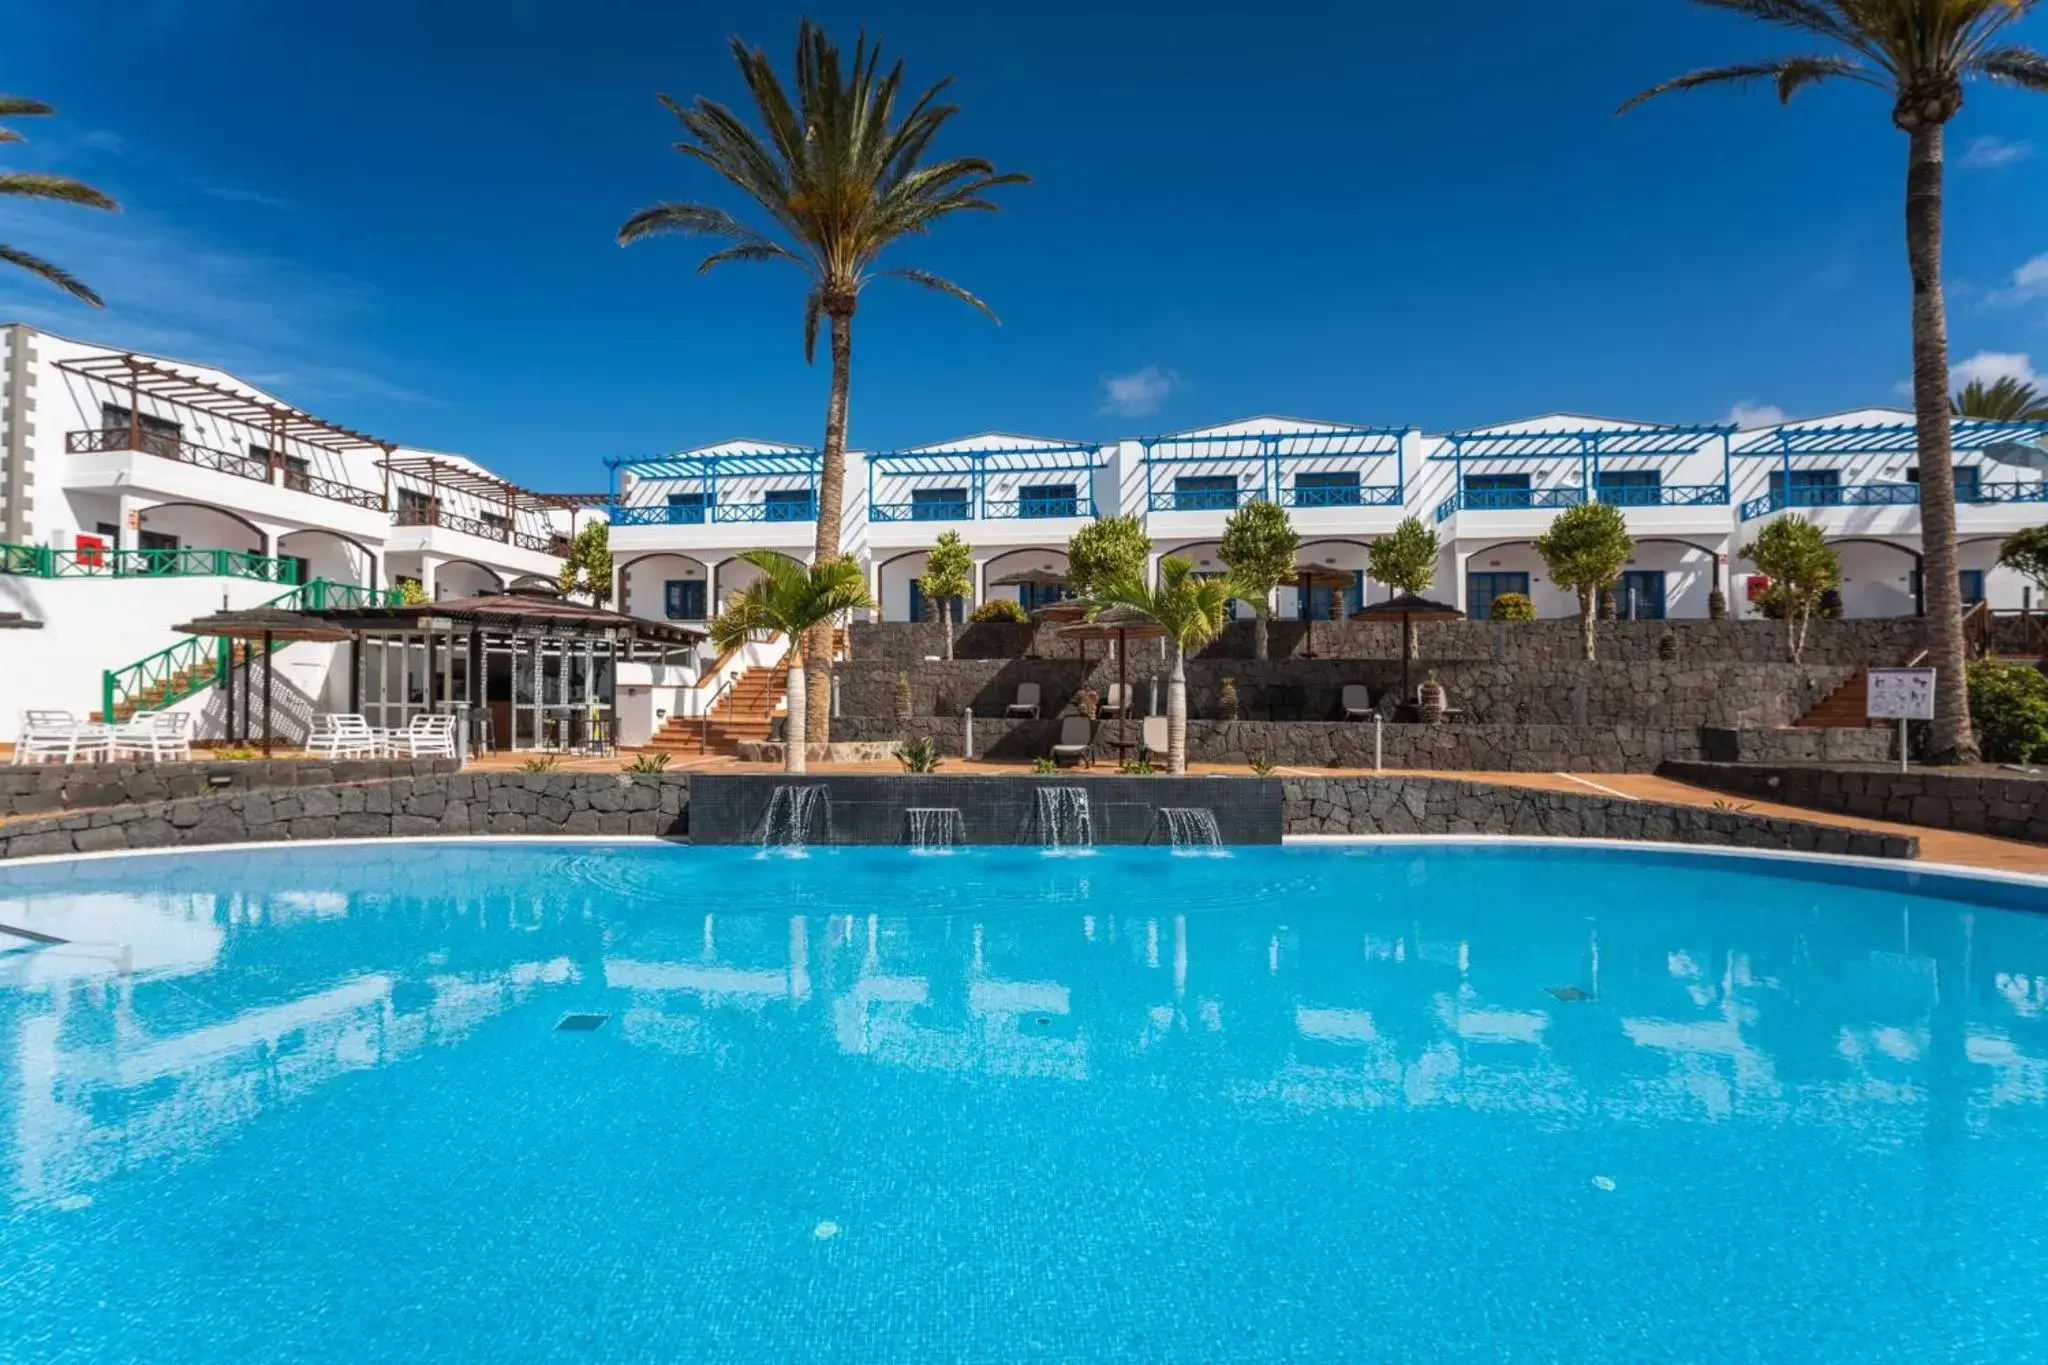 Swimming Pool in Hotel Mirador Papagayo by LIVVO